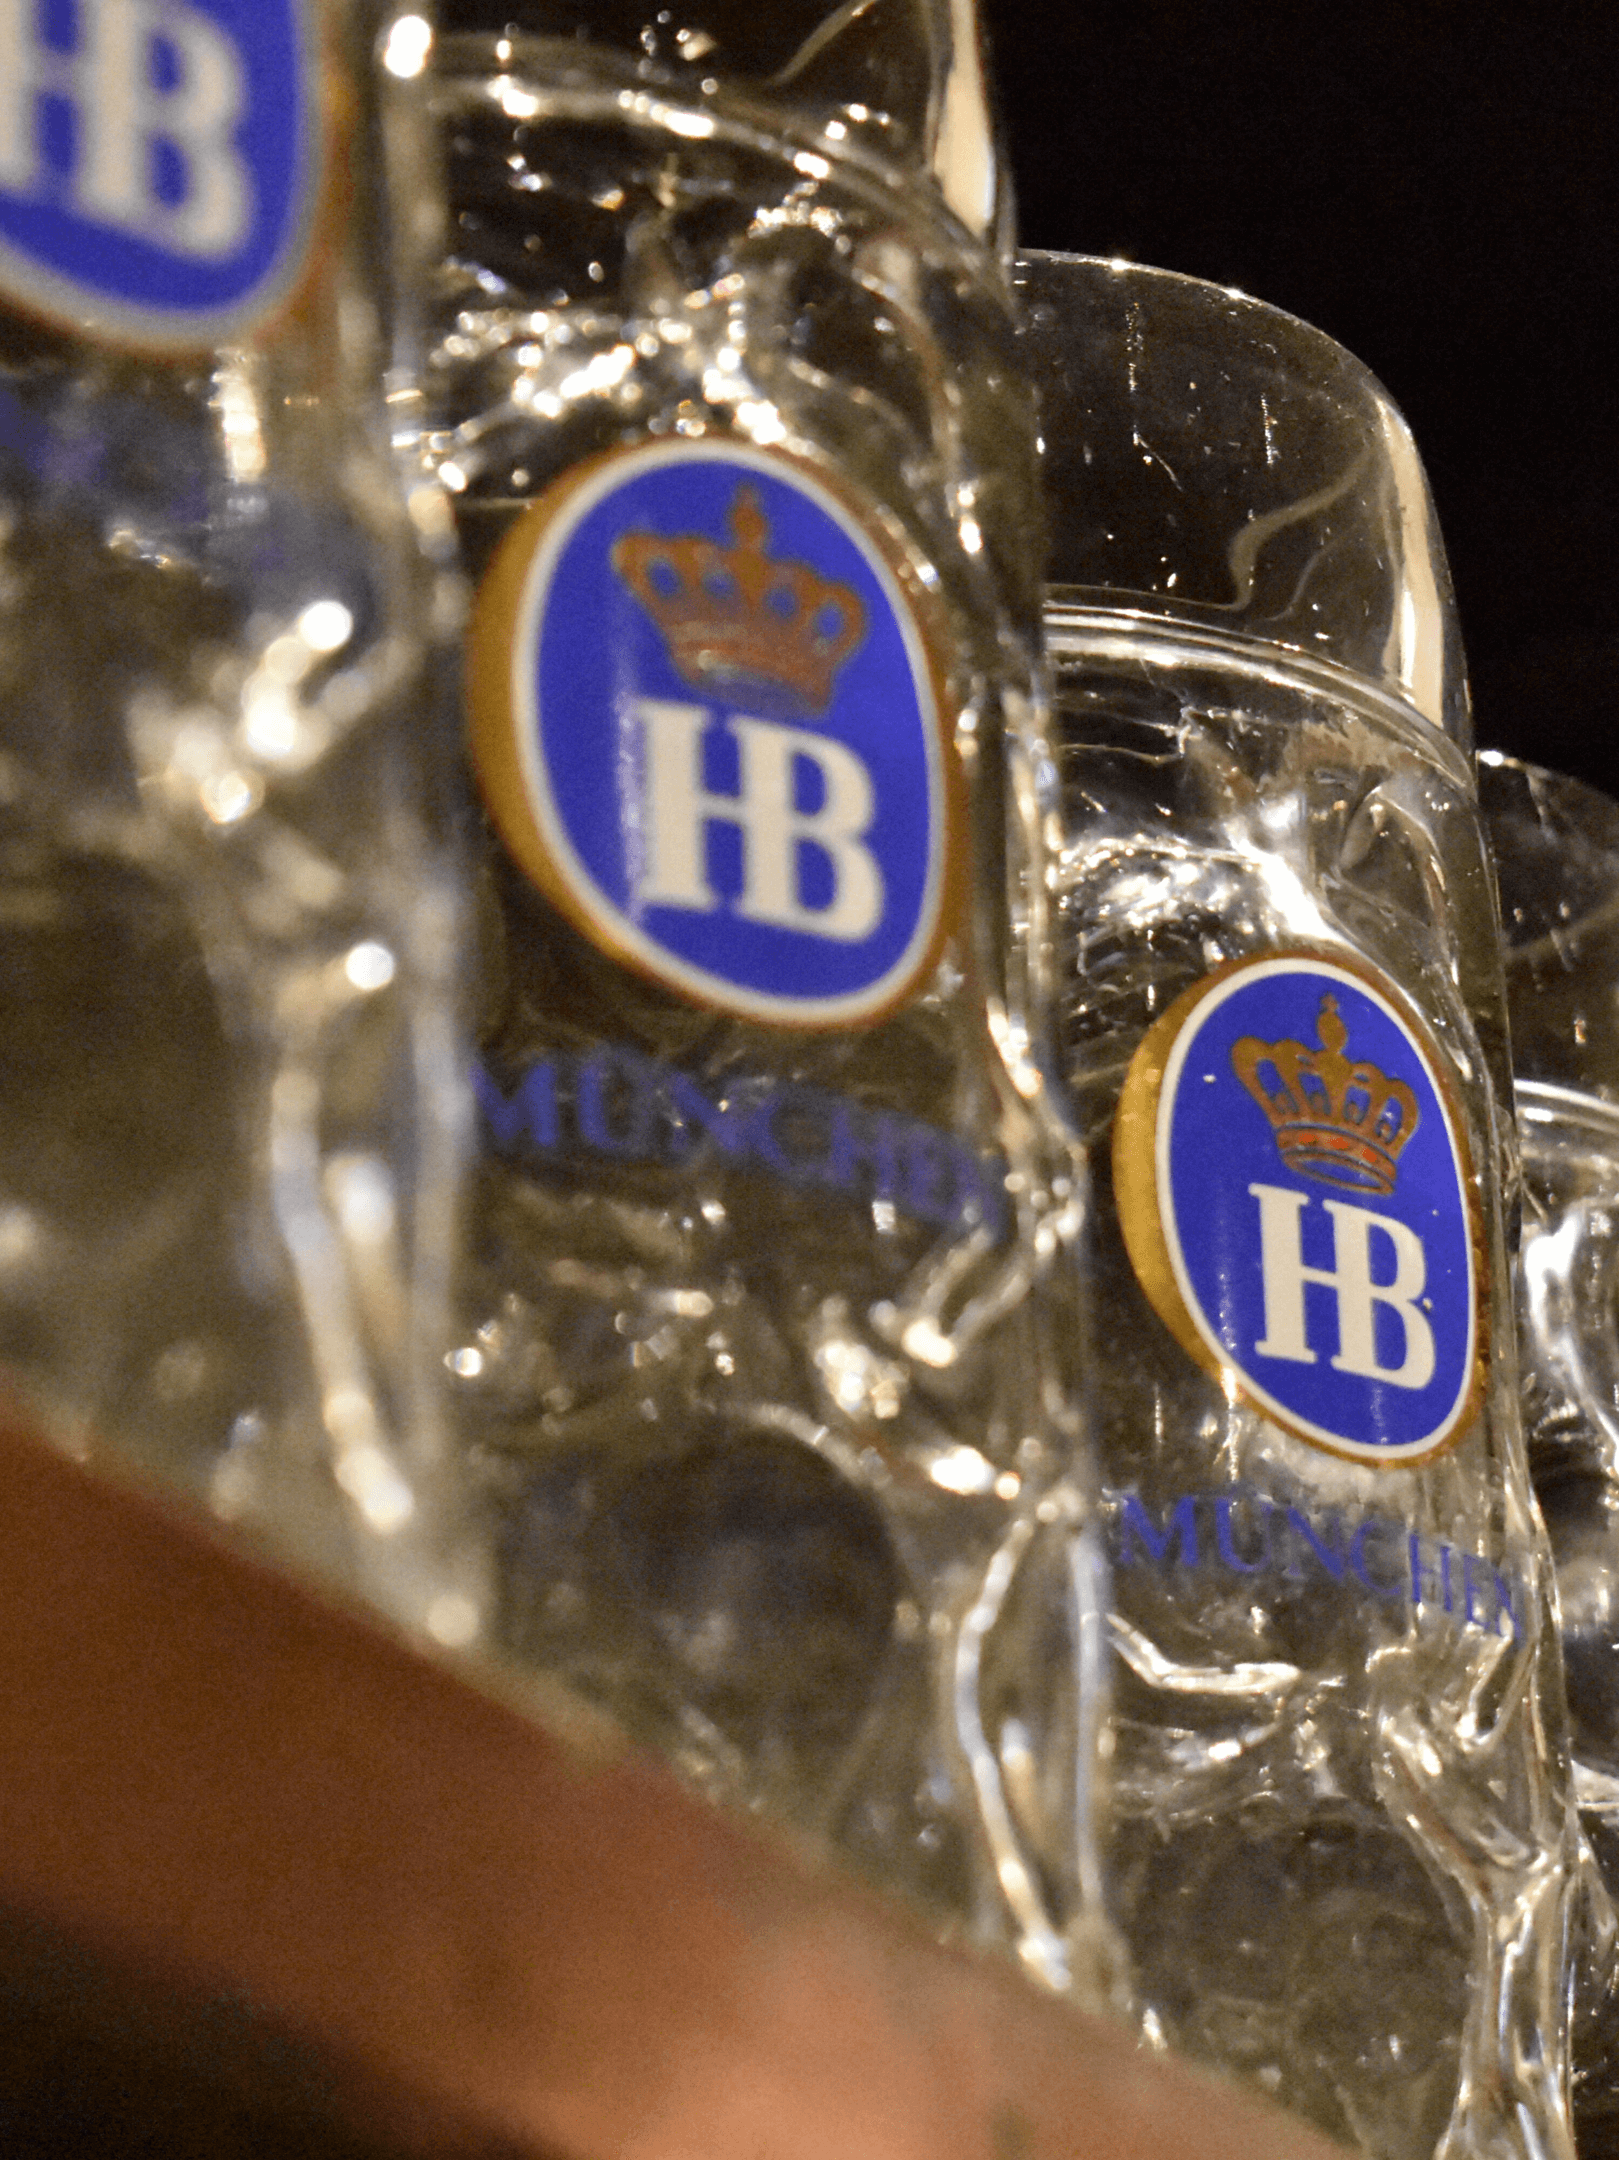 Beer Glasses at the Hofbräuhaus beer hall in Munich